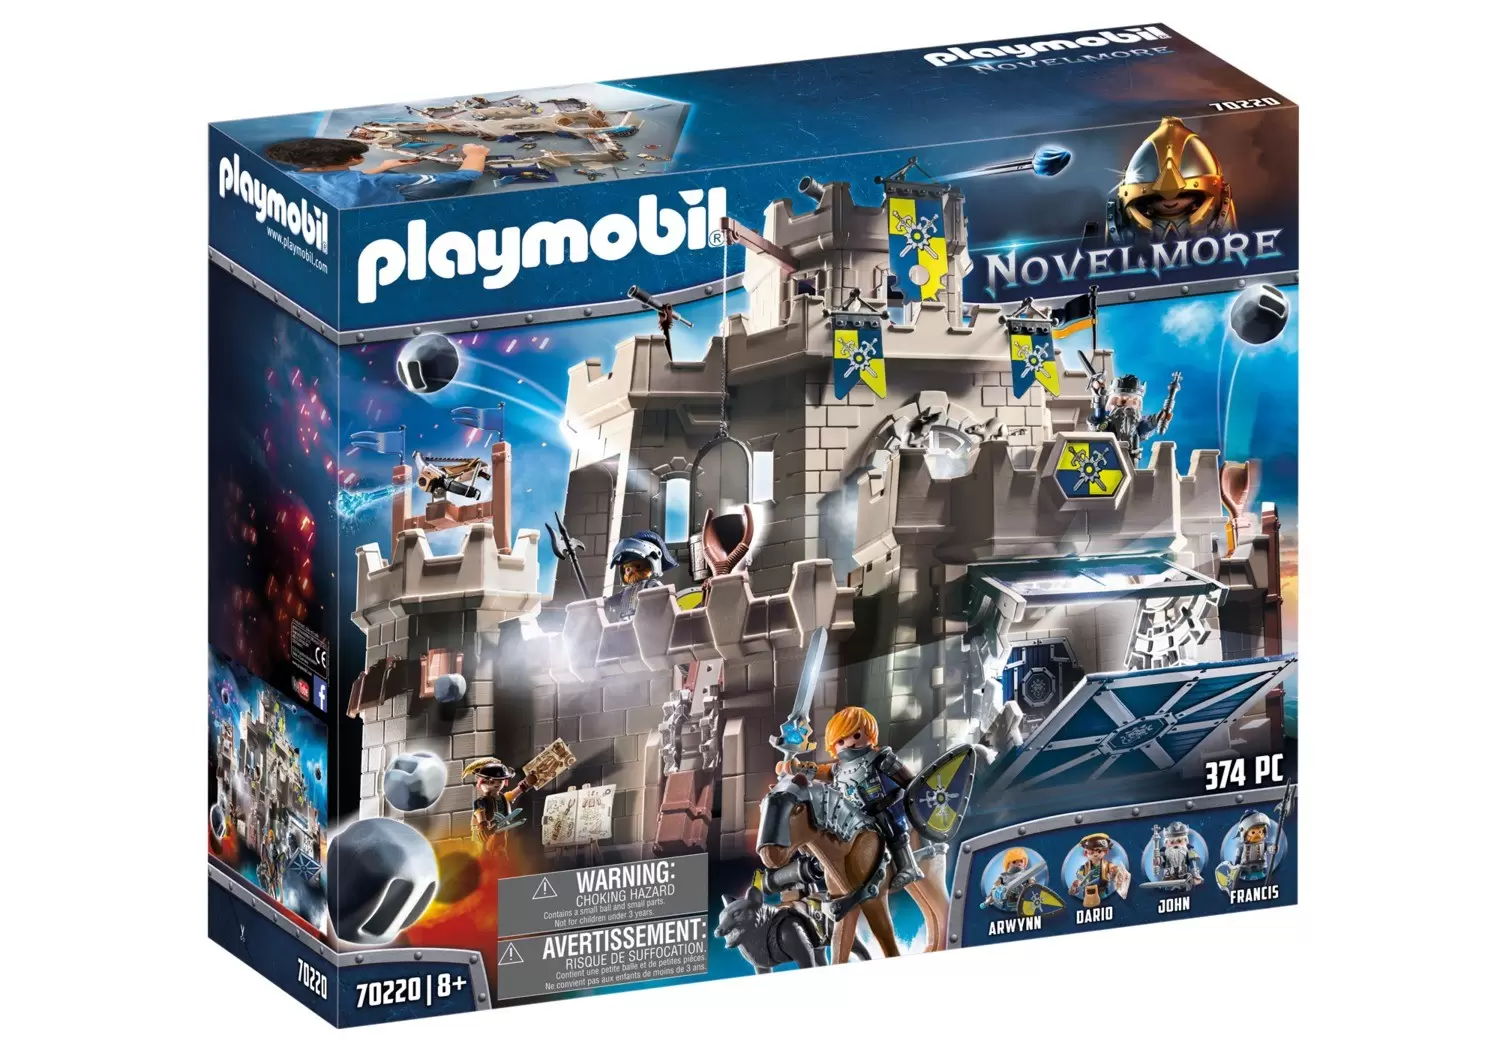 Playmobil Novelmore - NOVELMORE castle